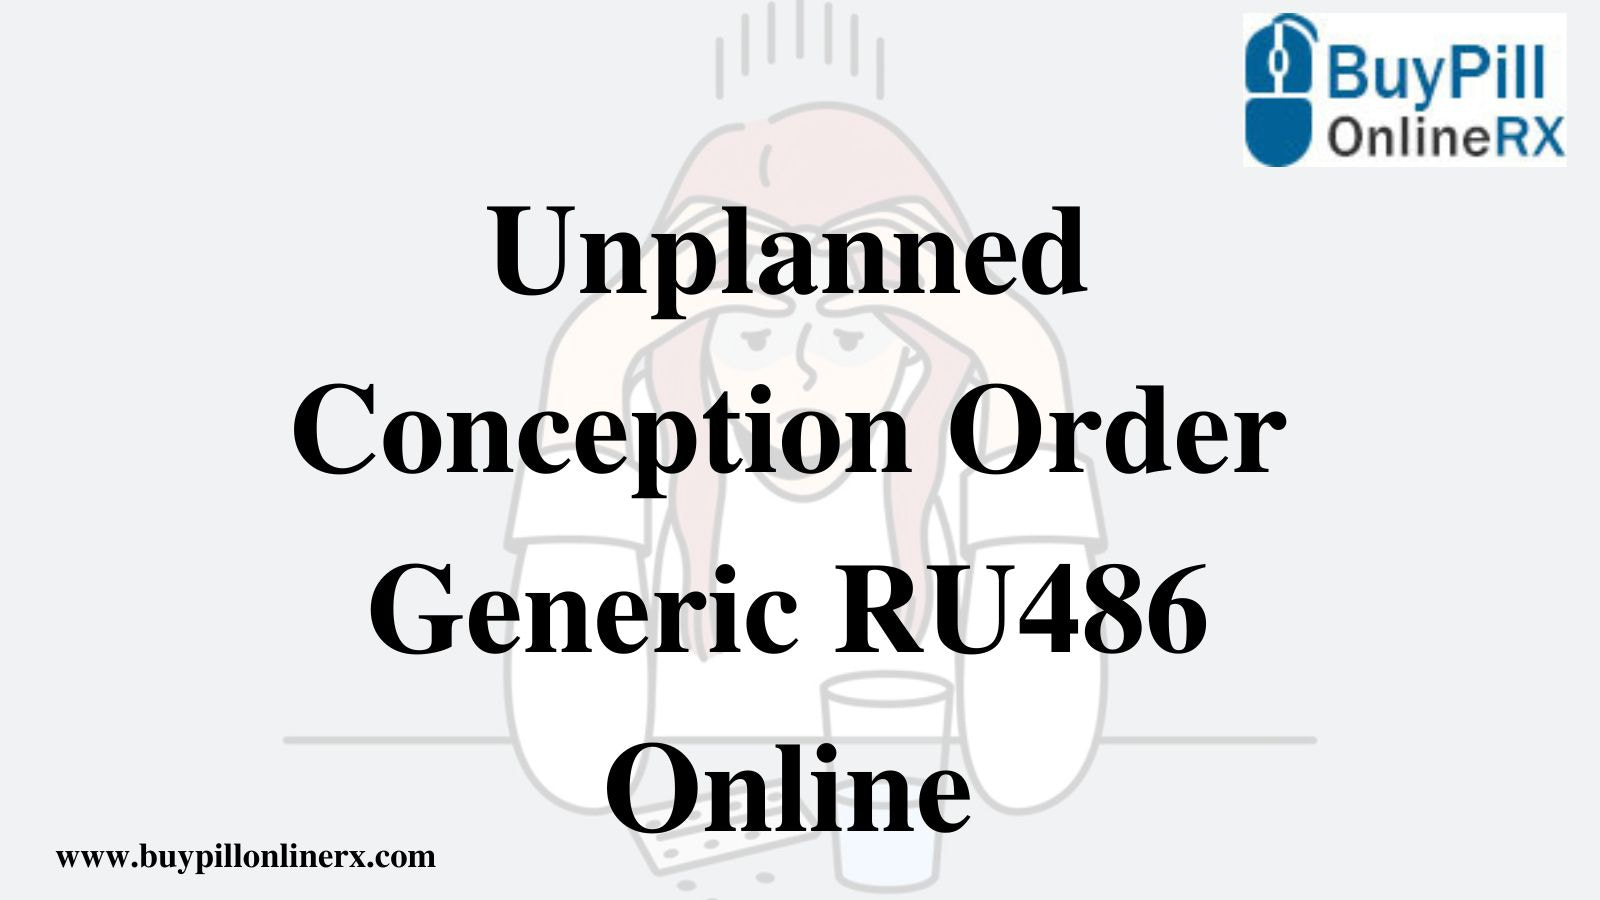 Unplanned conception order Generic RU486 online - Buy Pill Online Rx